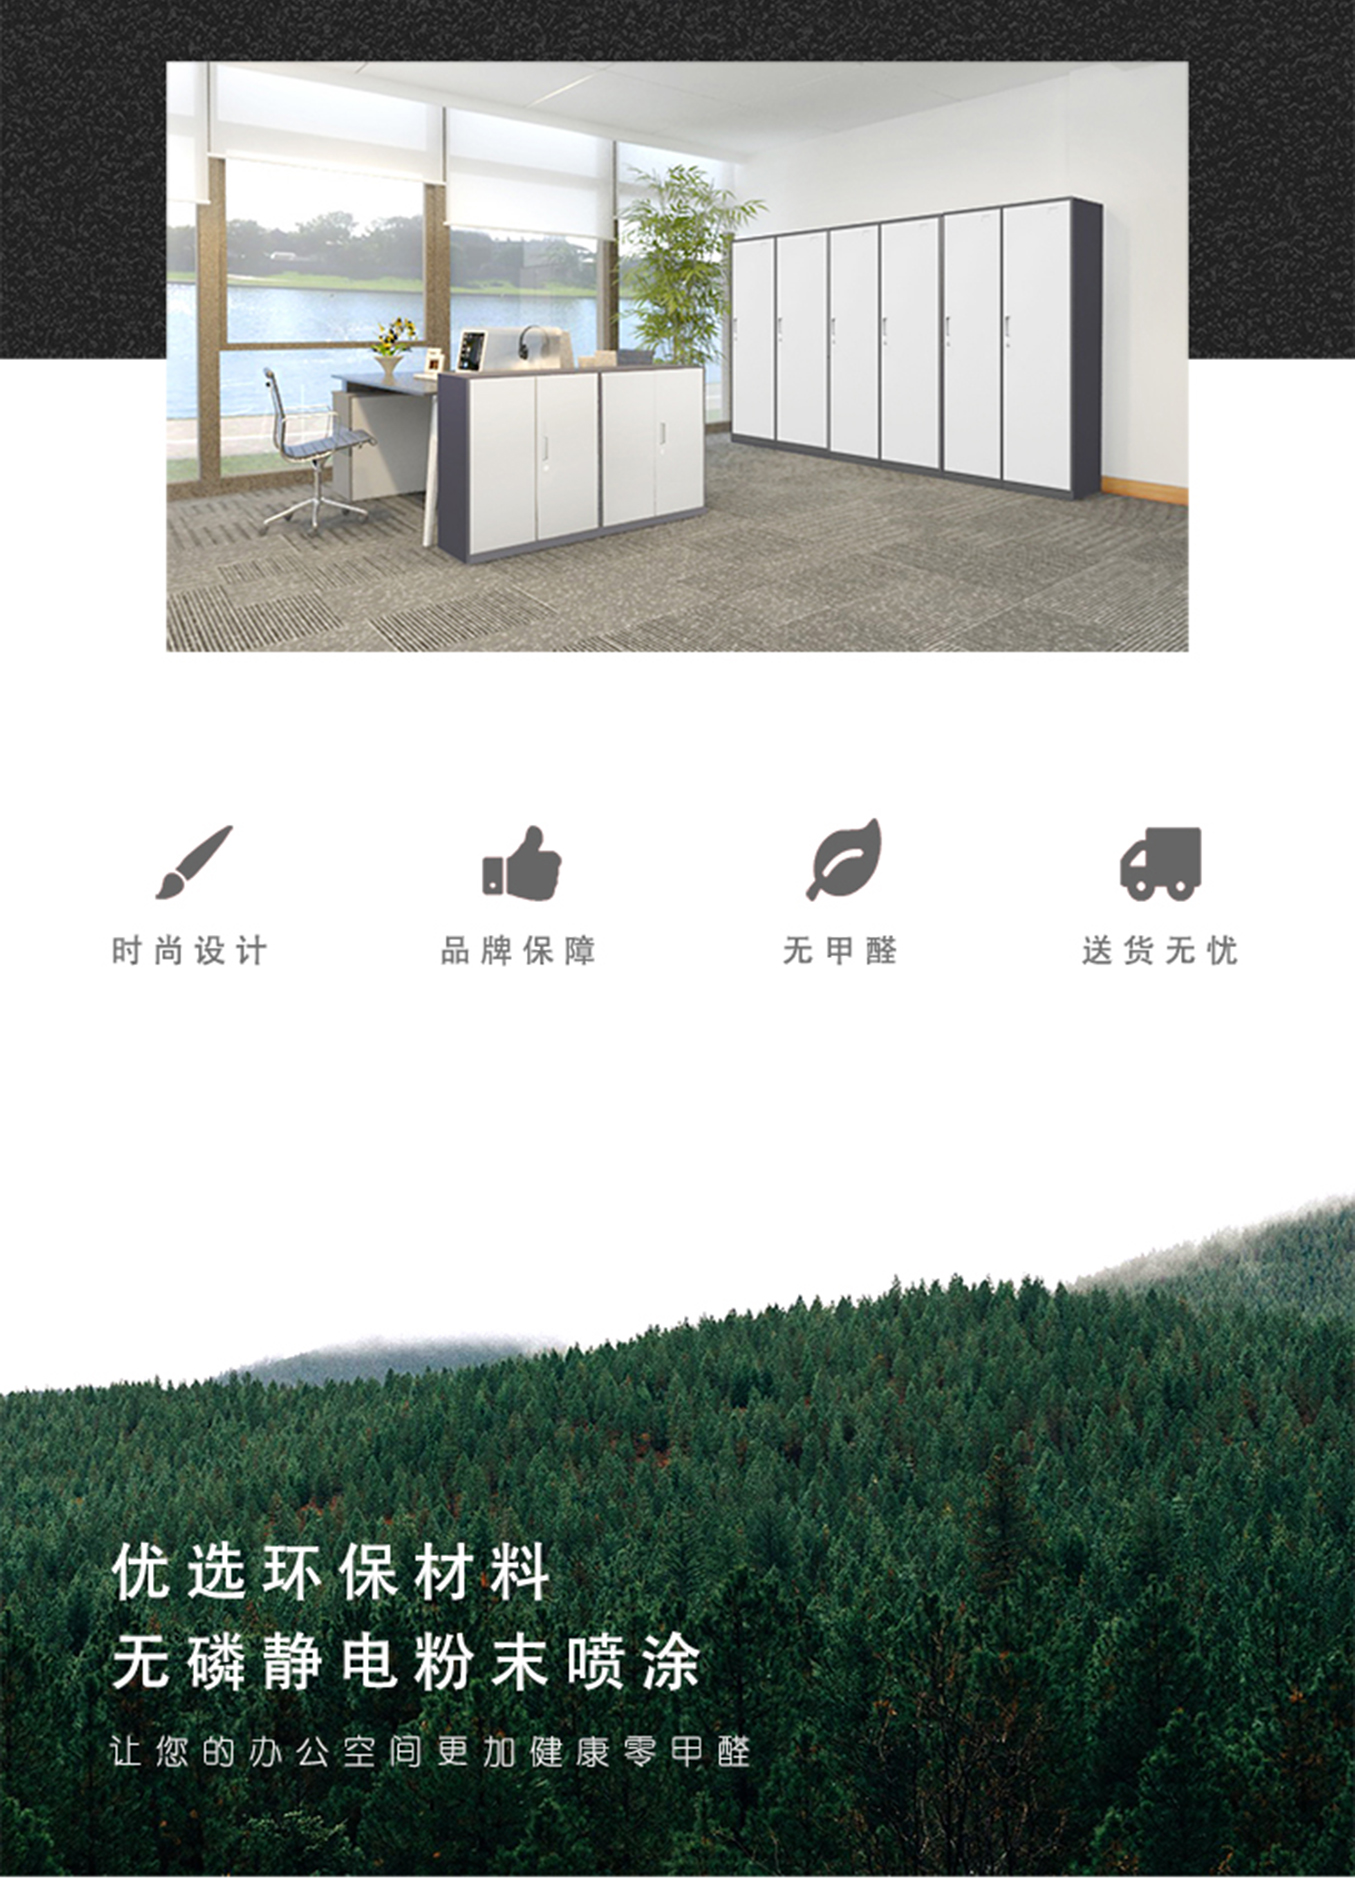 Steel three door locker, worker's cabinet, storage cabinet, factory dormitory, bathroom, wardrobe, Kefeiya